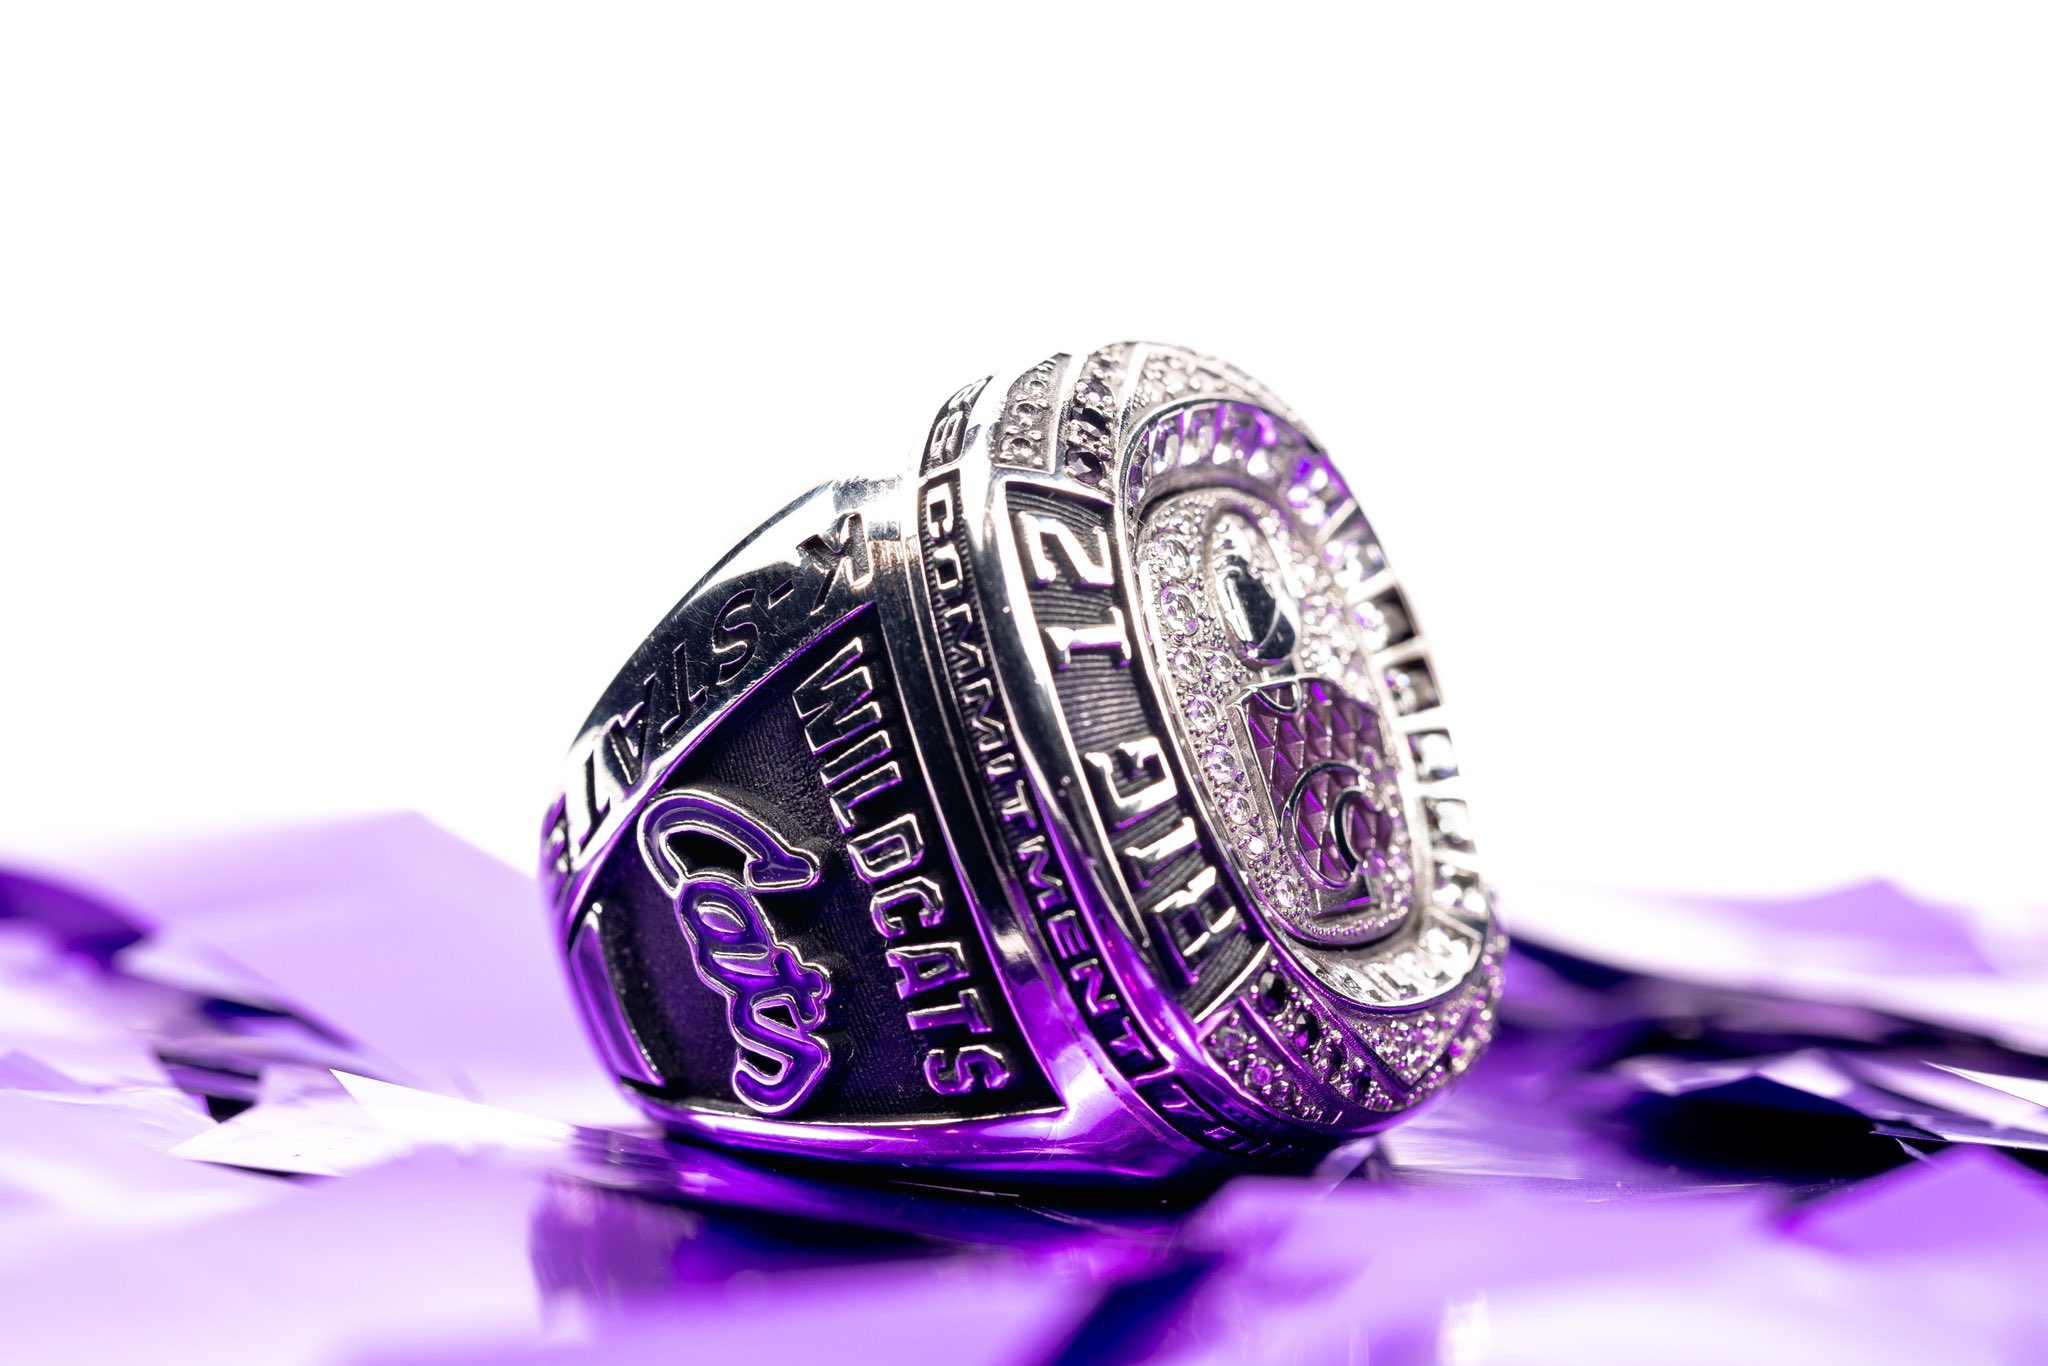 championship-ring-gallery - Signature Championship Rings